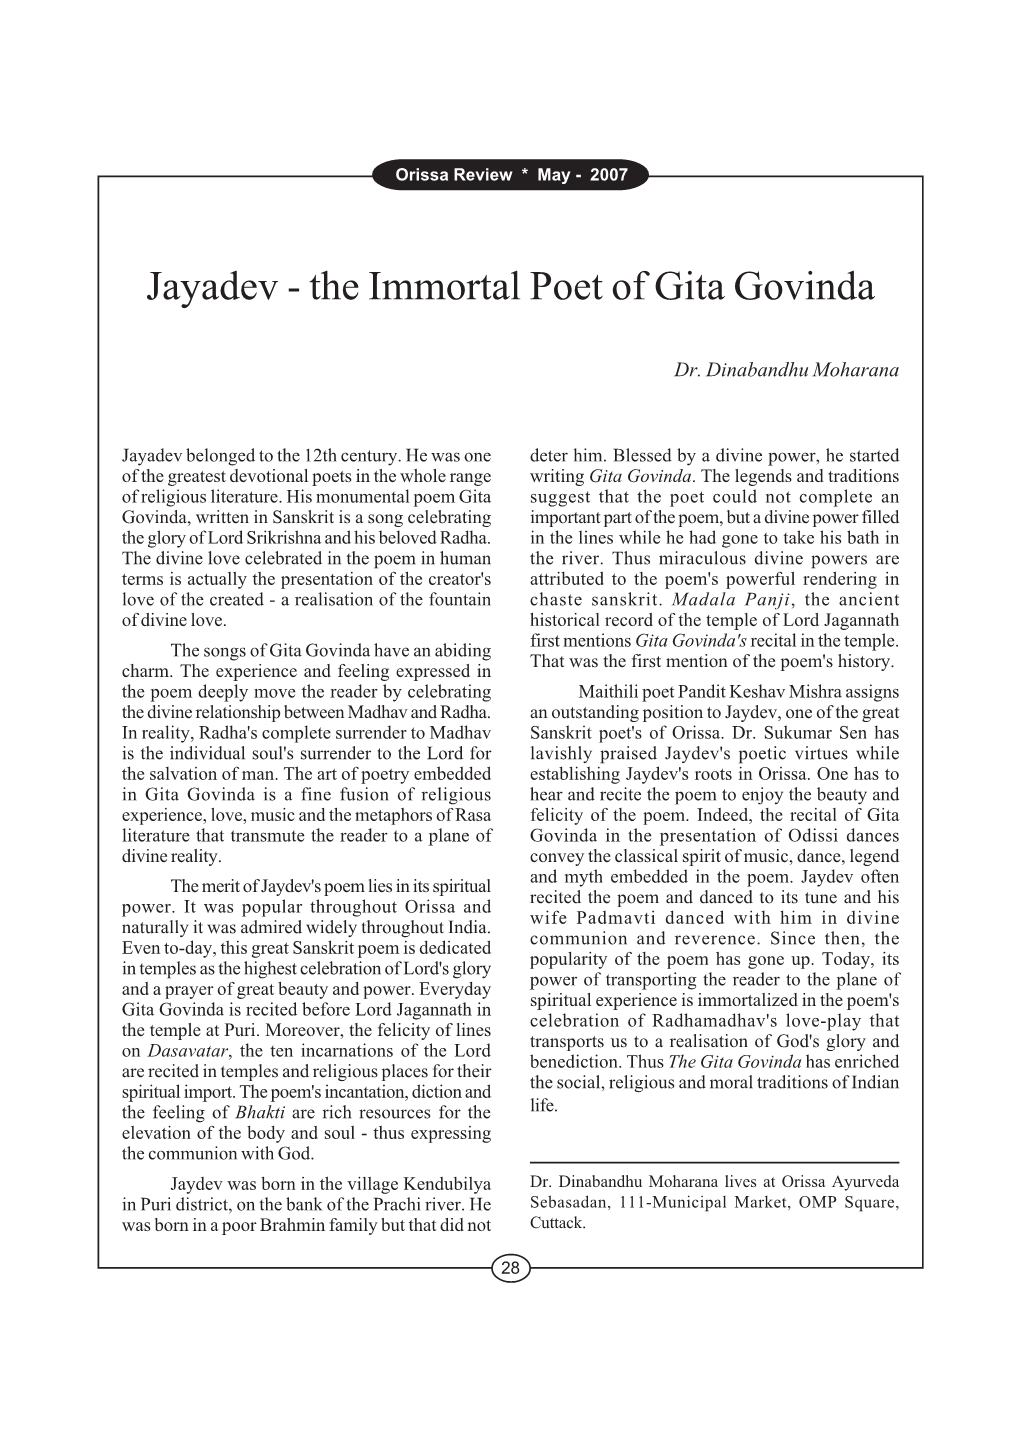 Jayadev - the Immortal Poet of Gita Govinda